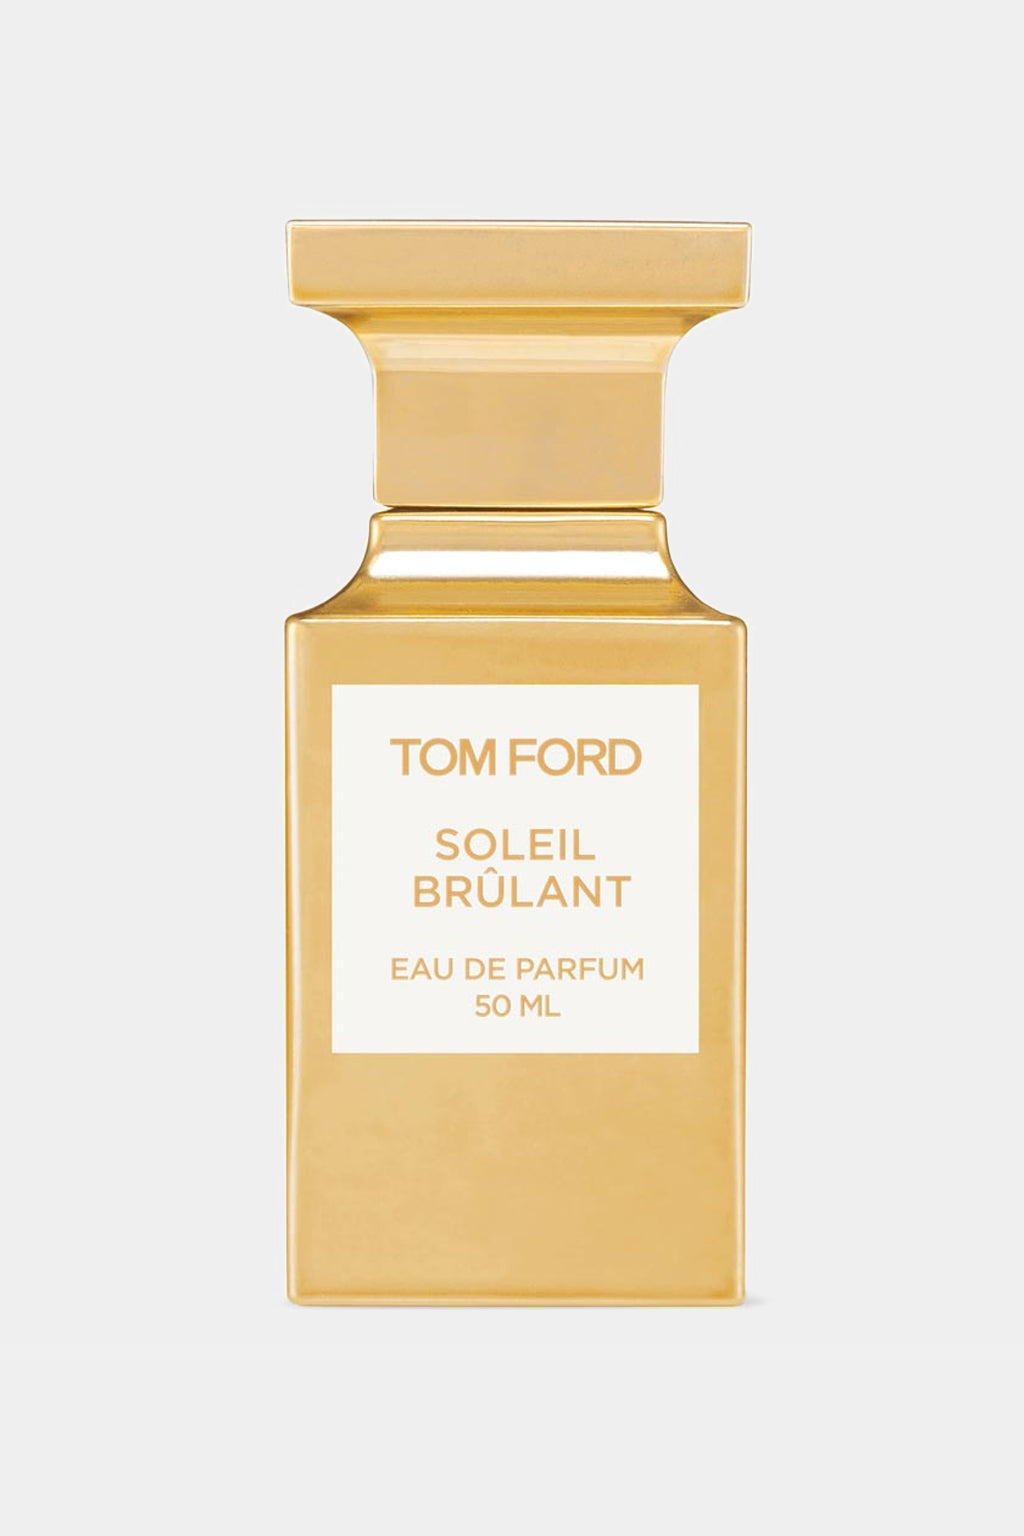 Tom Ford - Soleil Brulant Eau de Parfum